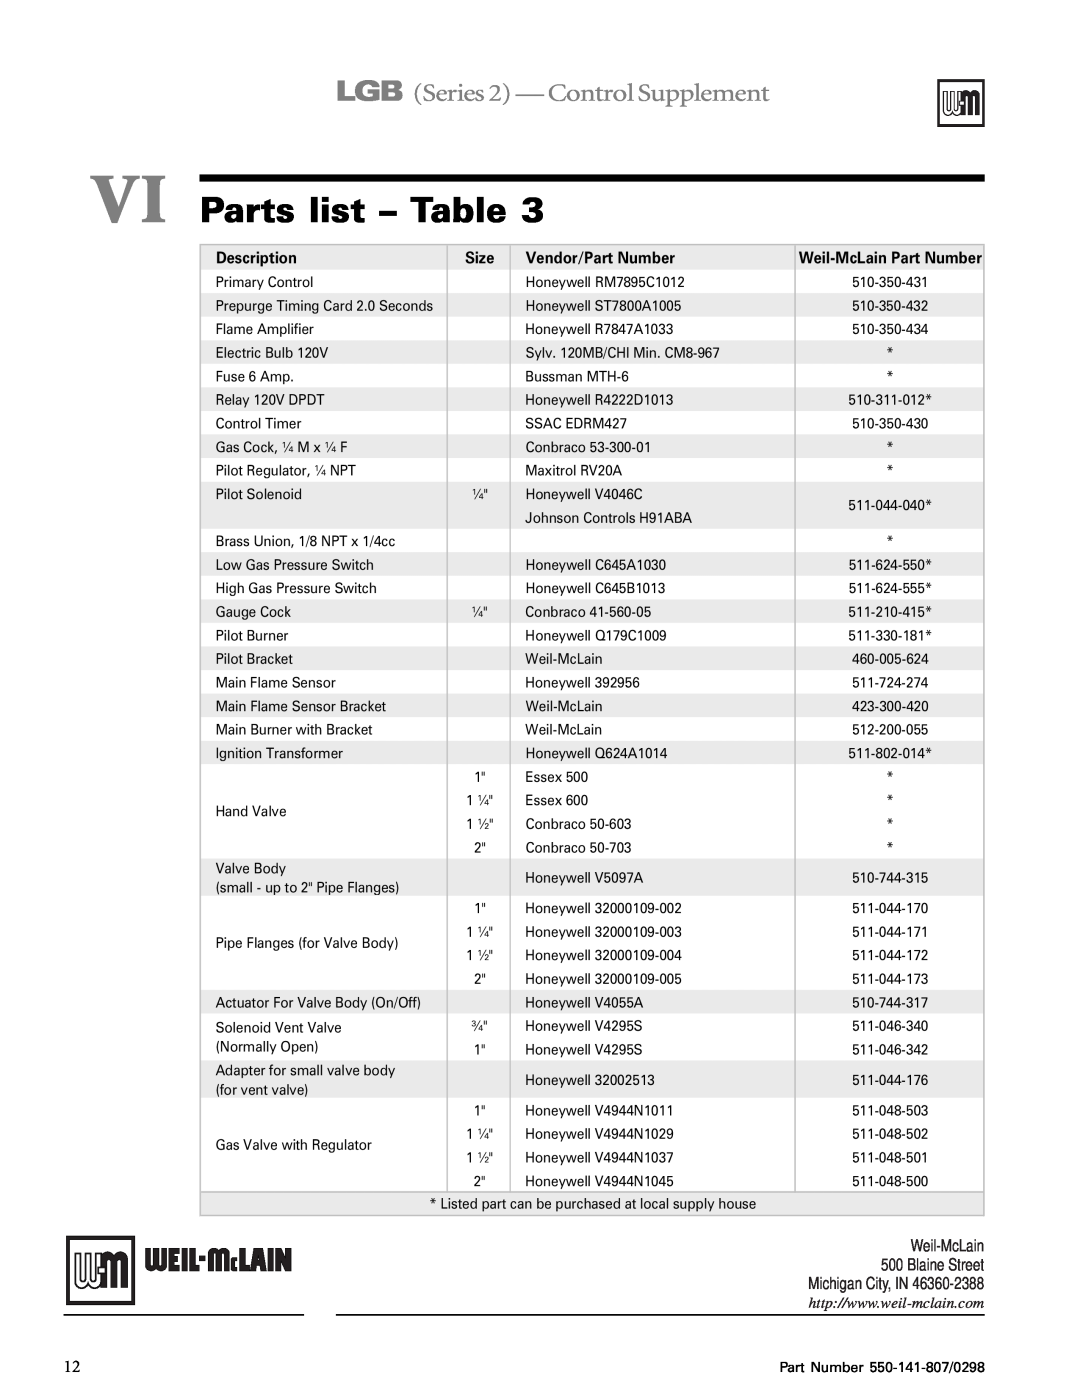 Weil-McLain WMBC-1A manual VI Parts list - Table, Weil-McLain 500 Blaine Street Michigan City, IN, Aut w 